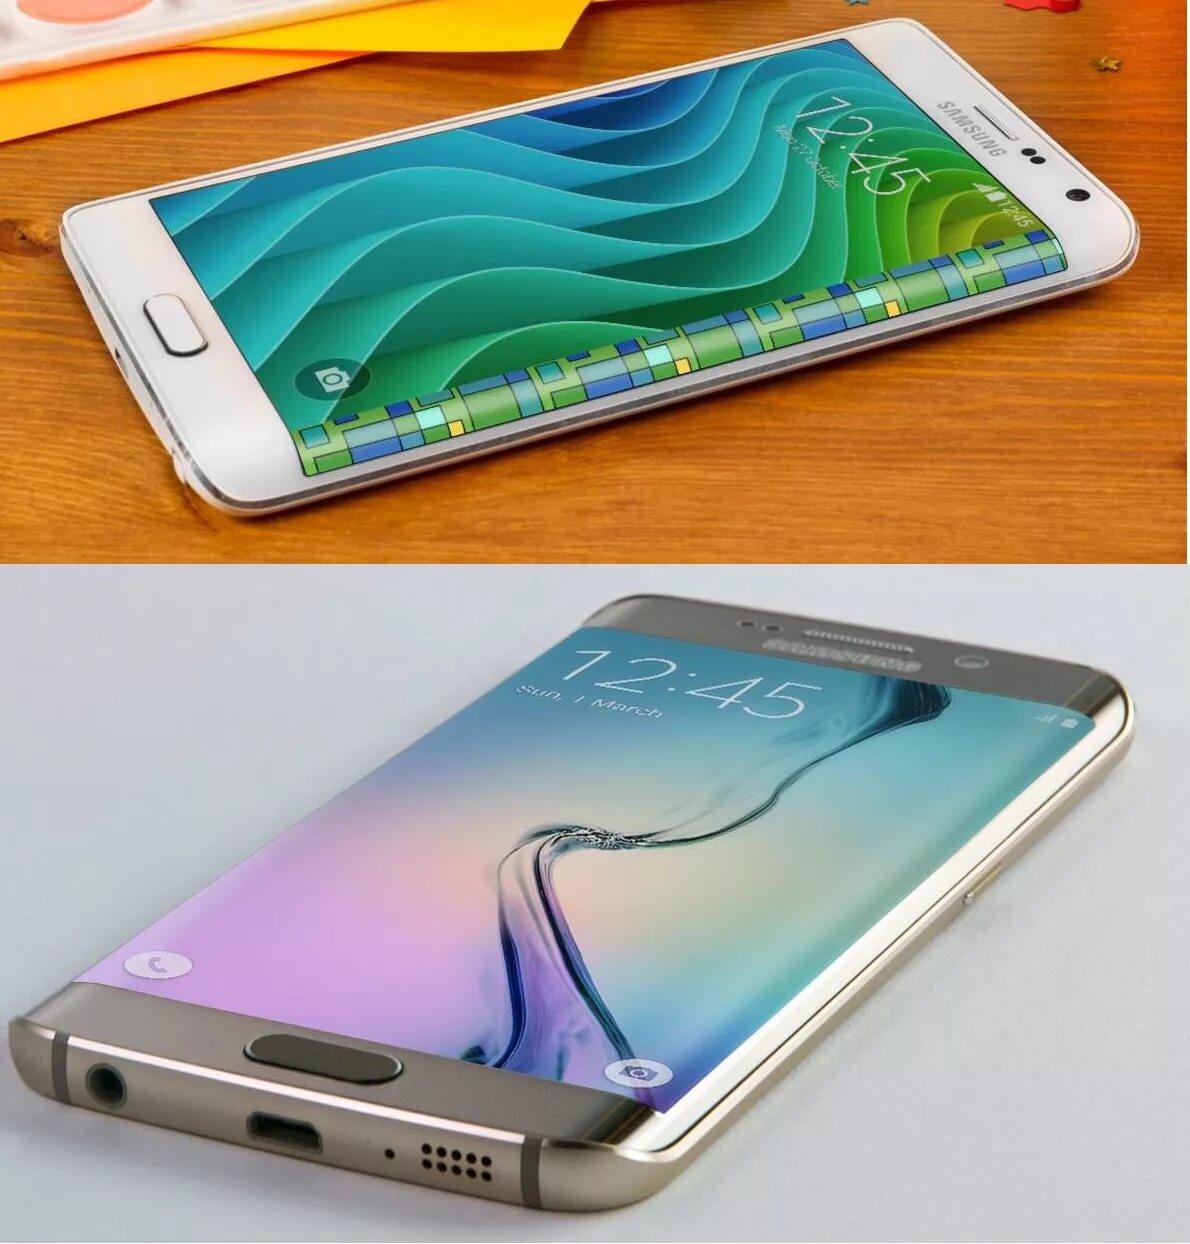 Samsung Galaxy s6 Note. Samsung Note s6. Samsung Galaxy a 6 Pro. Самсунг галакси ноут 6. Телефоны samsung a6